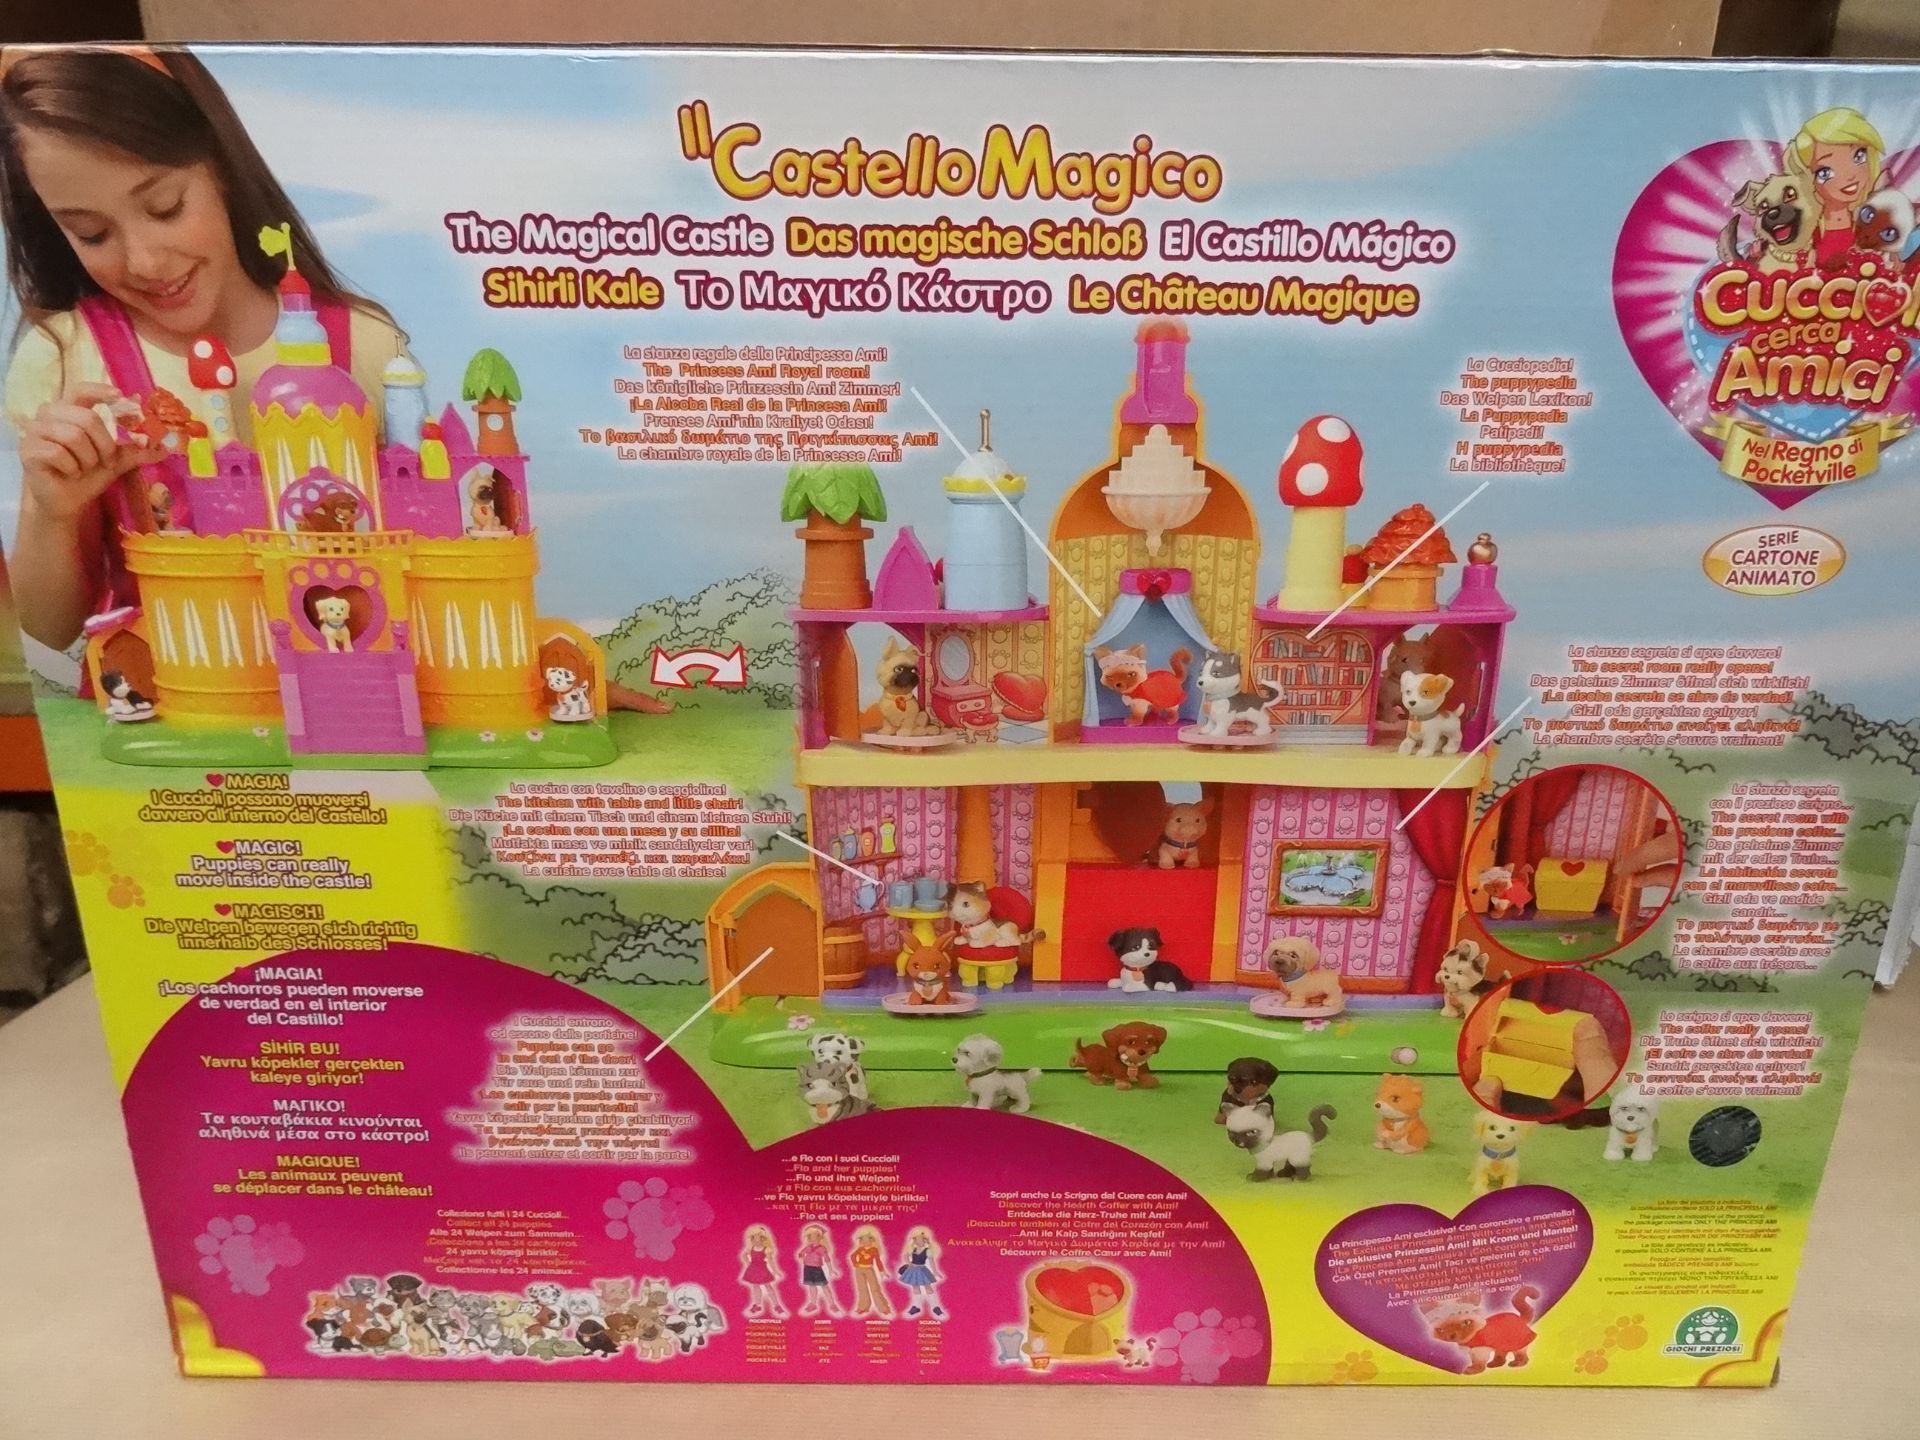 4 x Cuccili Cerca Amici Castle Magico Large Kids Play set castles! RRP £79.99 Each! Total RRP £319. - Image 2 of 4